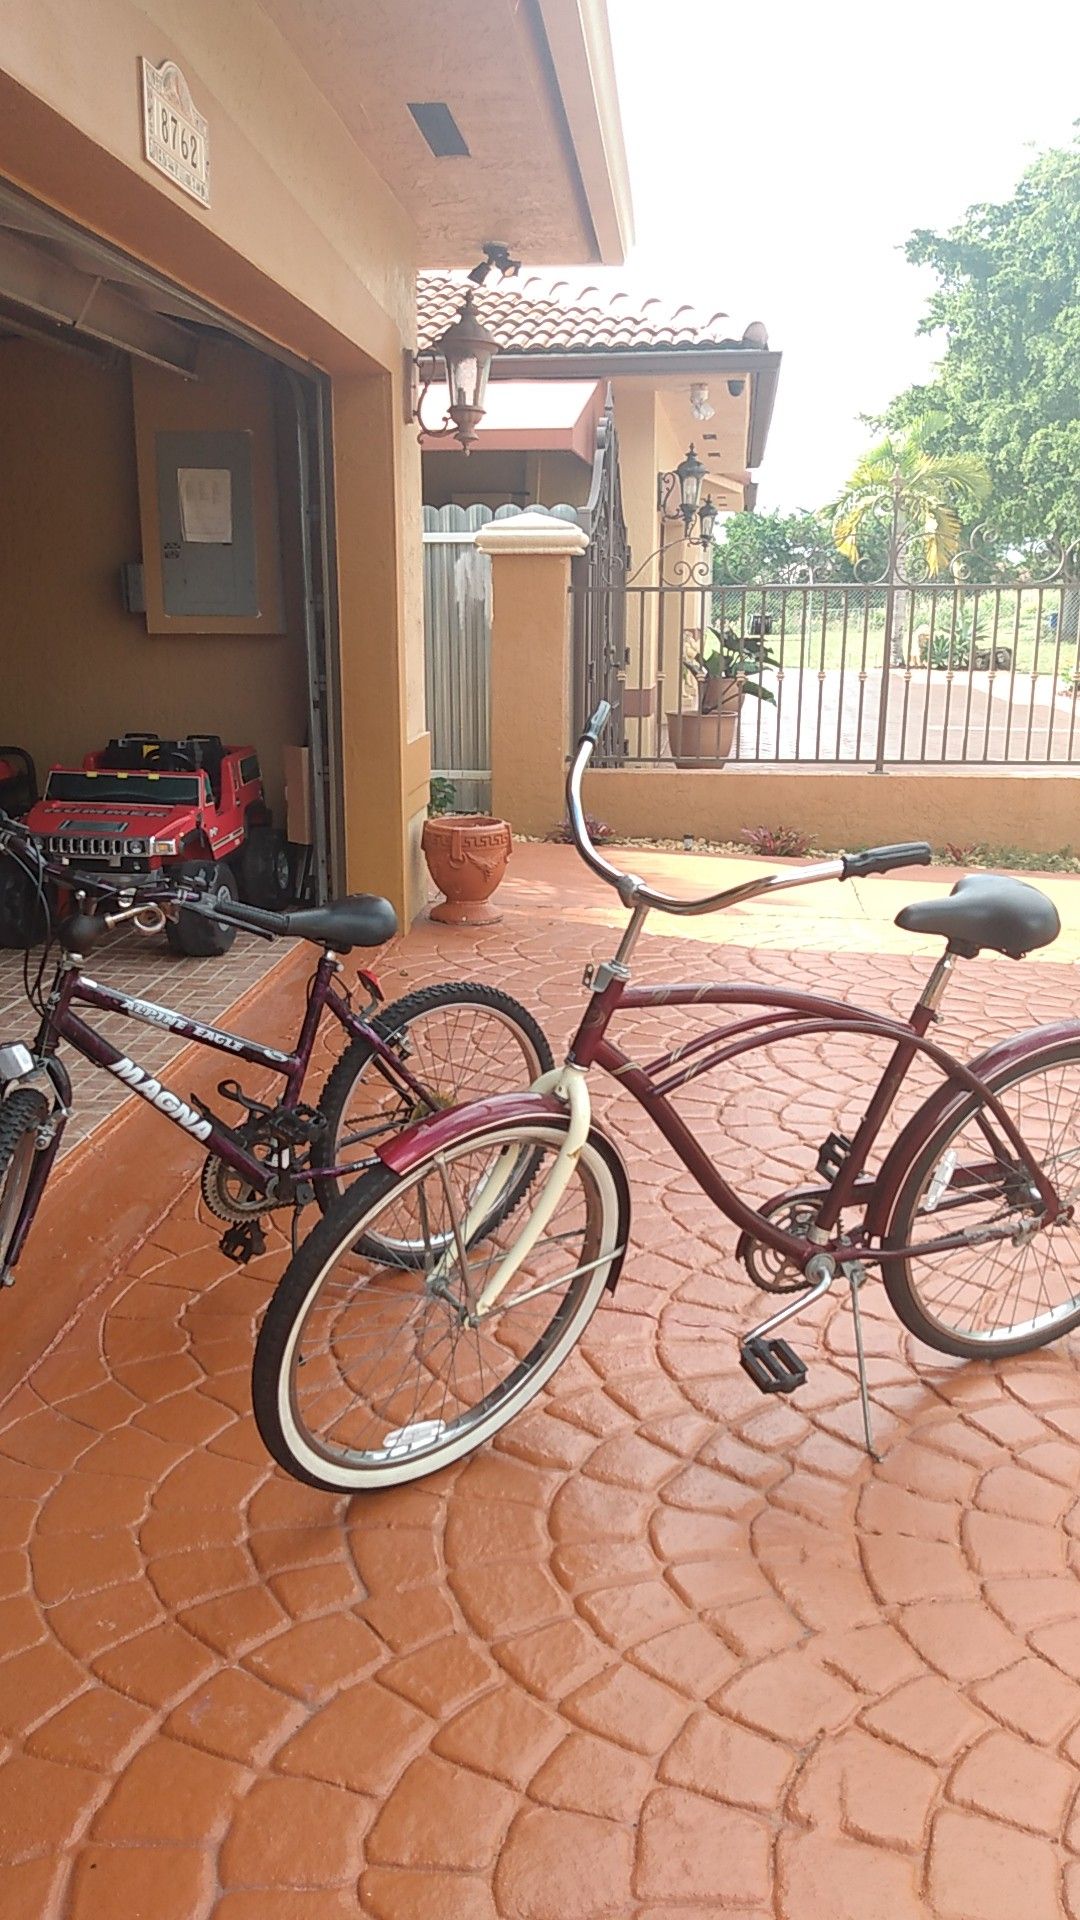 2 bicycles cruiser and mountain bike